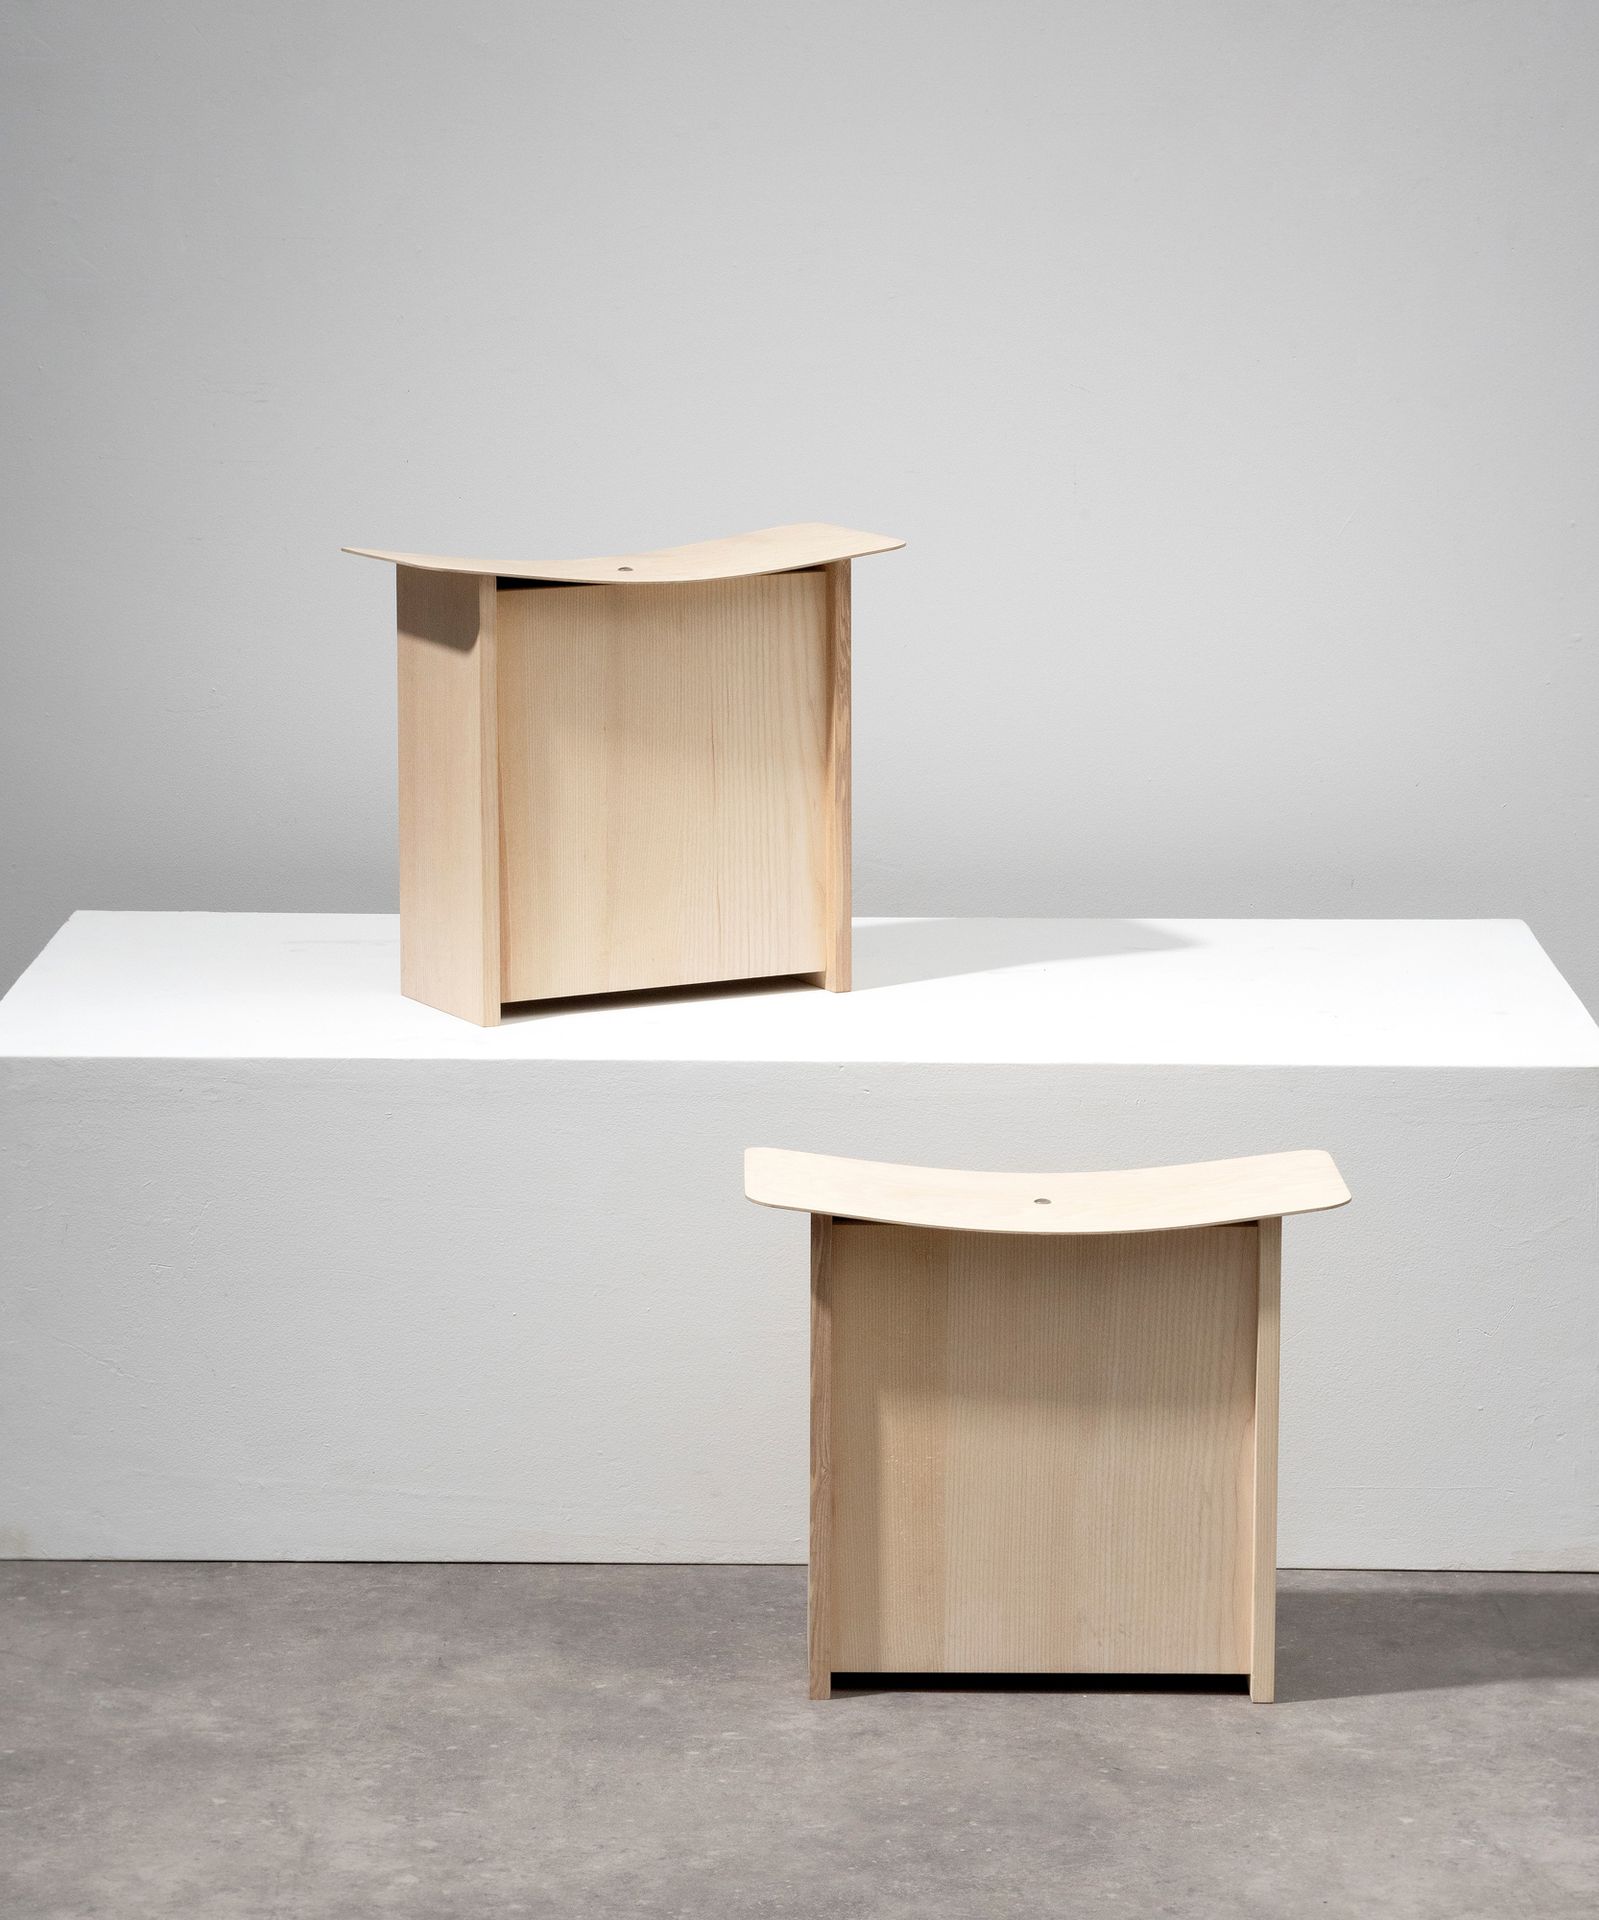 THIBAULT HUGUET Stool #1
Pair of stools
Solid ash and birch plywood.
Paar stoele&hellip;